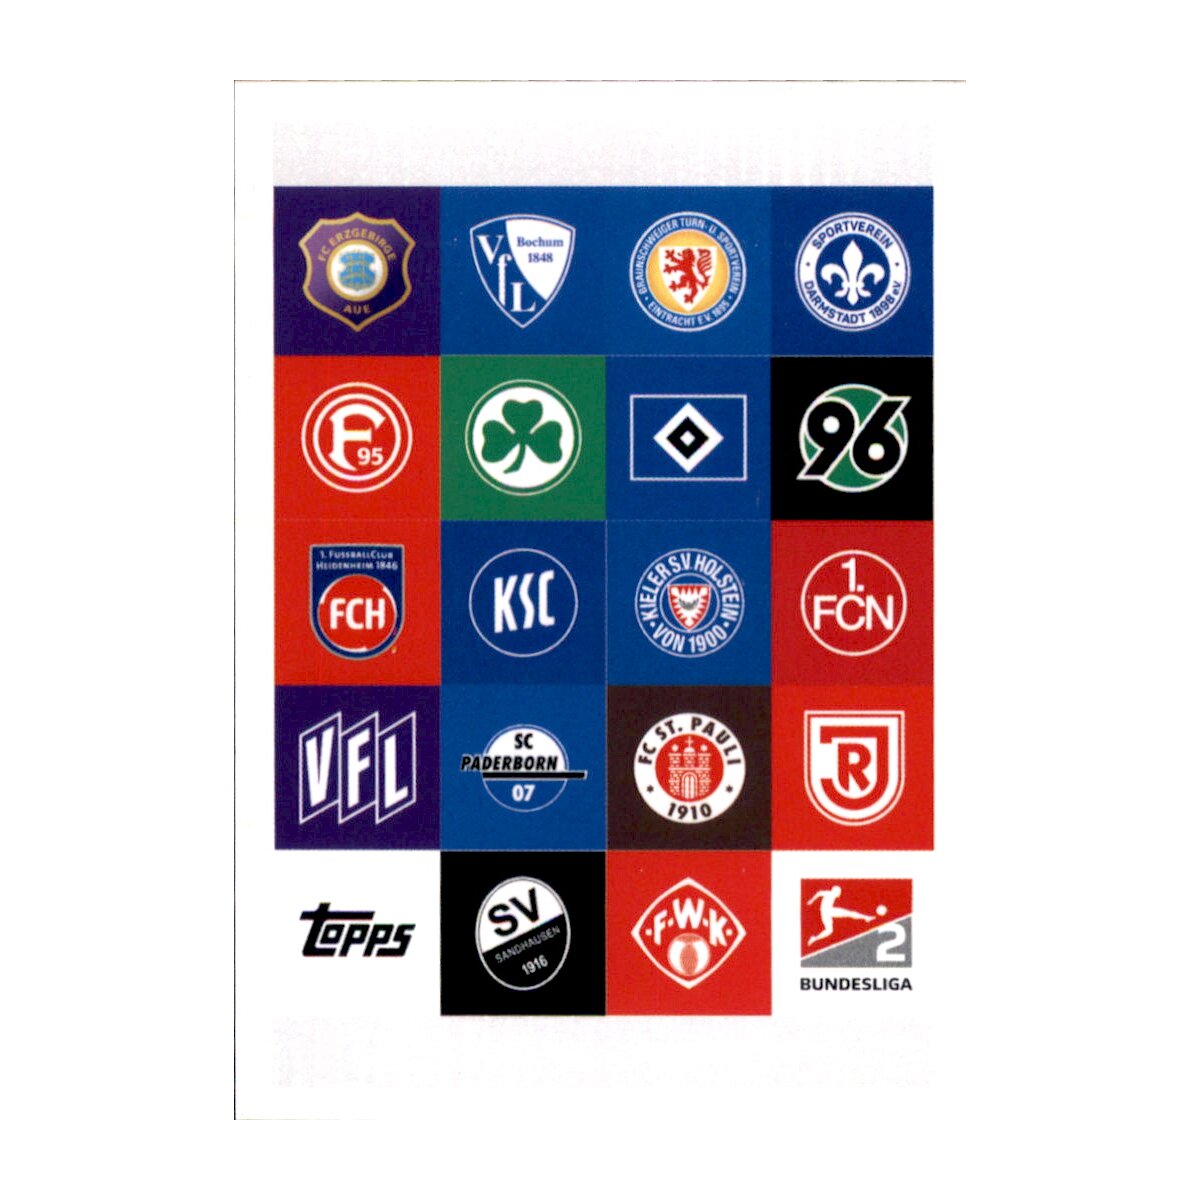 5 2 Bundesliga Team Logos Puzzle Karte 2020 2021 0 39